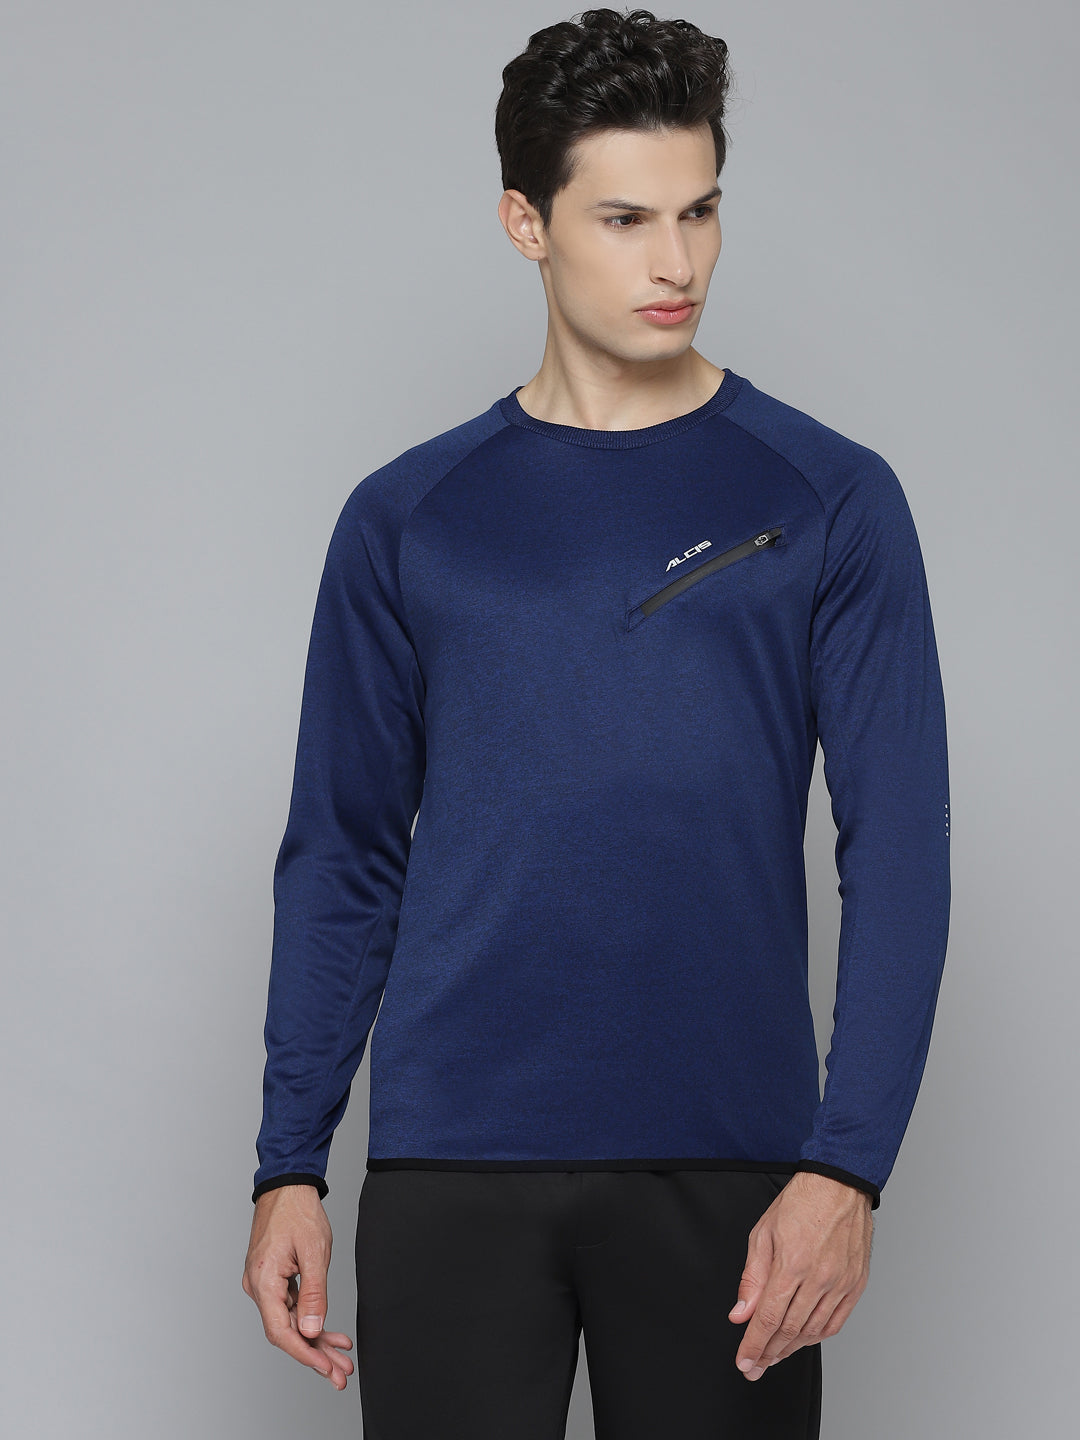 Alcis Men Solid Navy Blue Sweatshirts